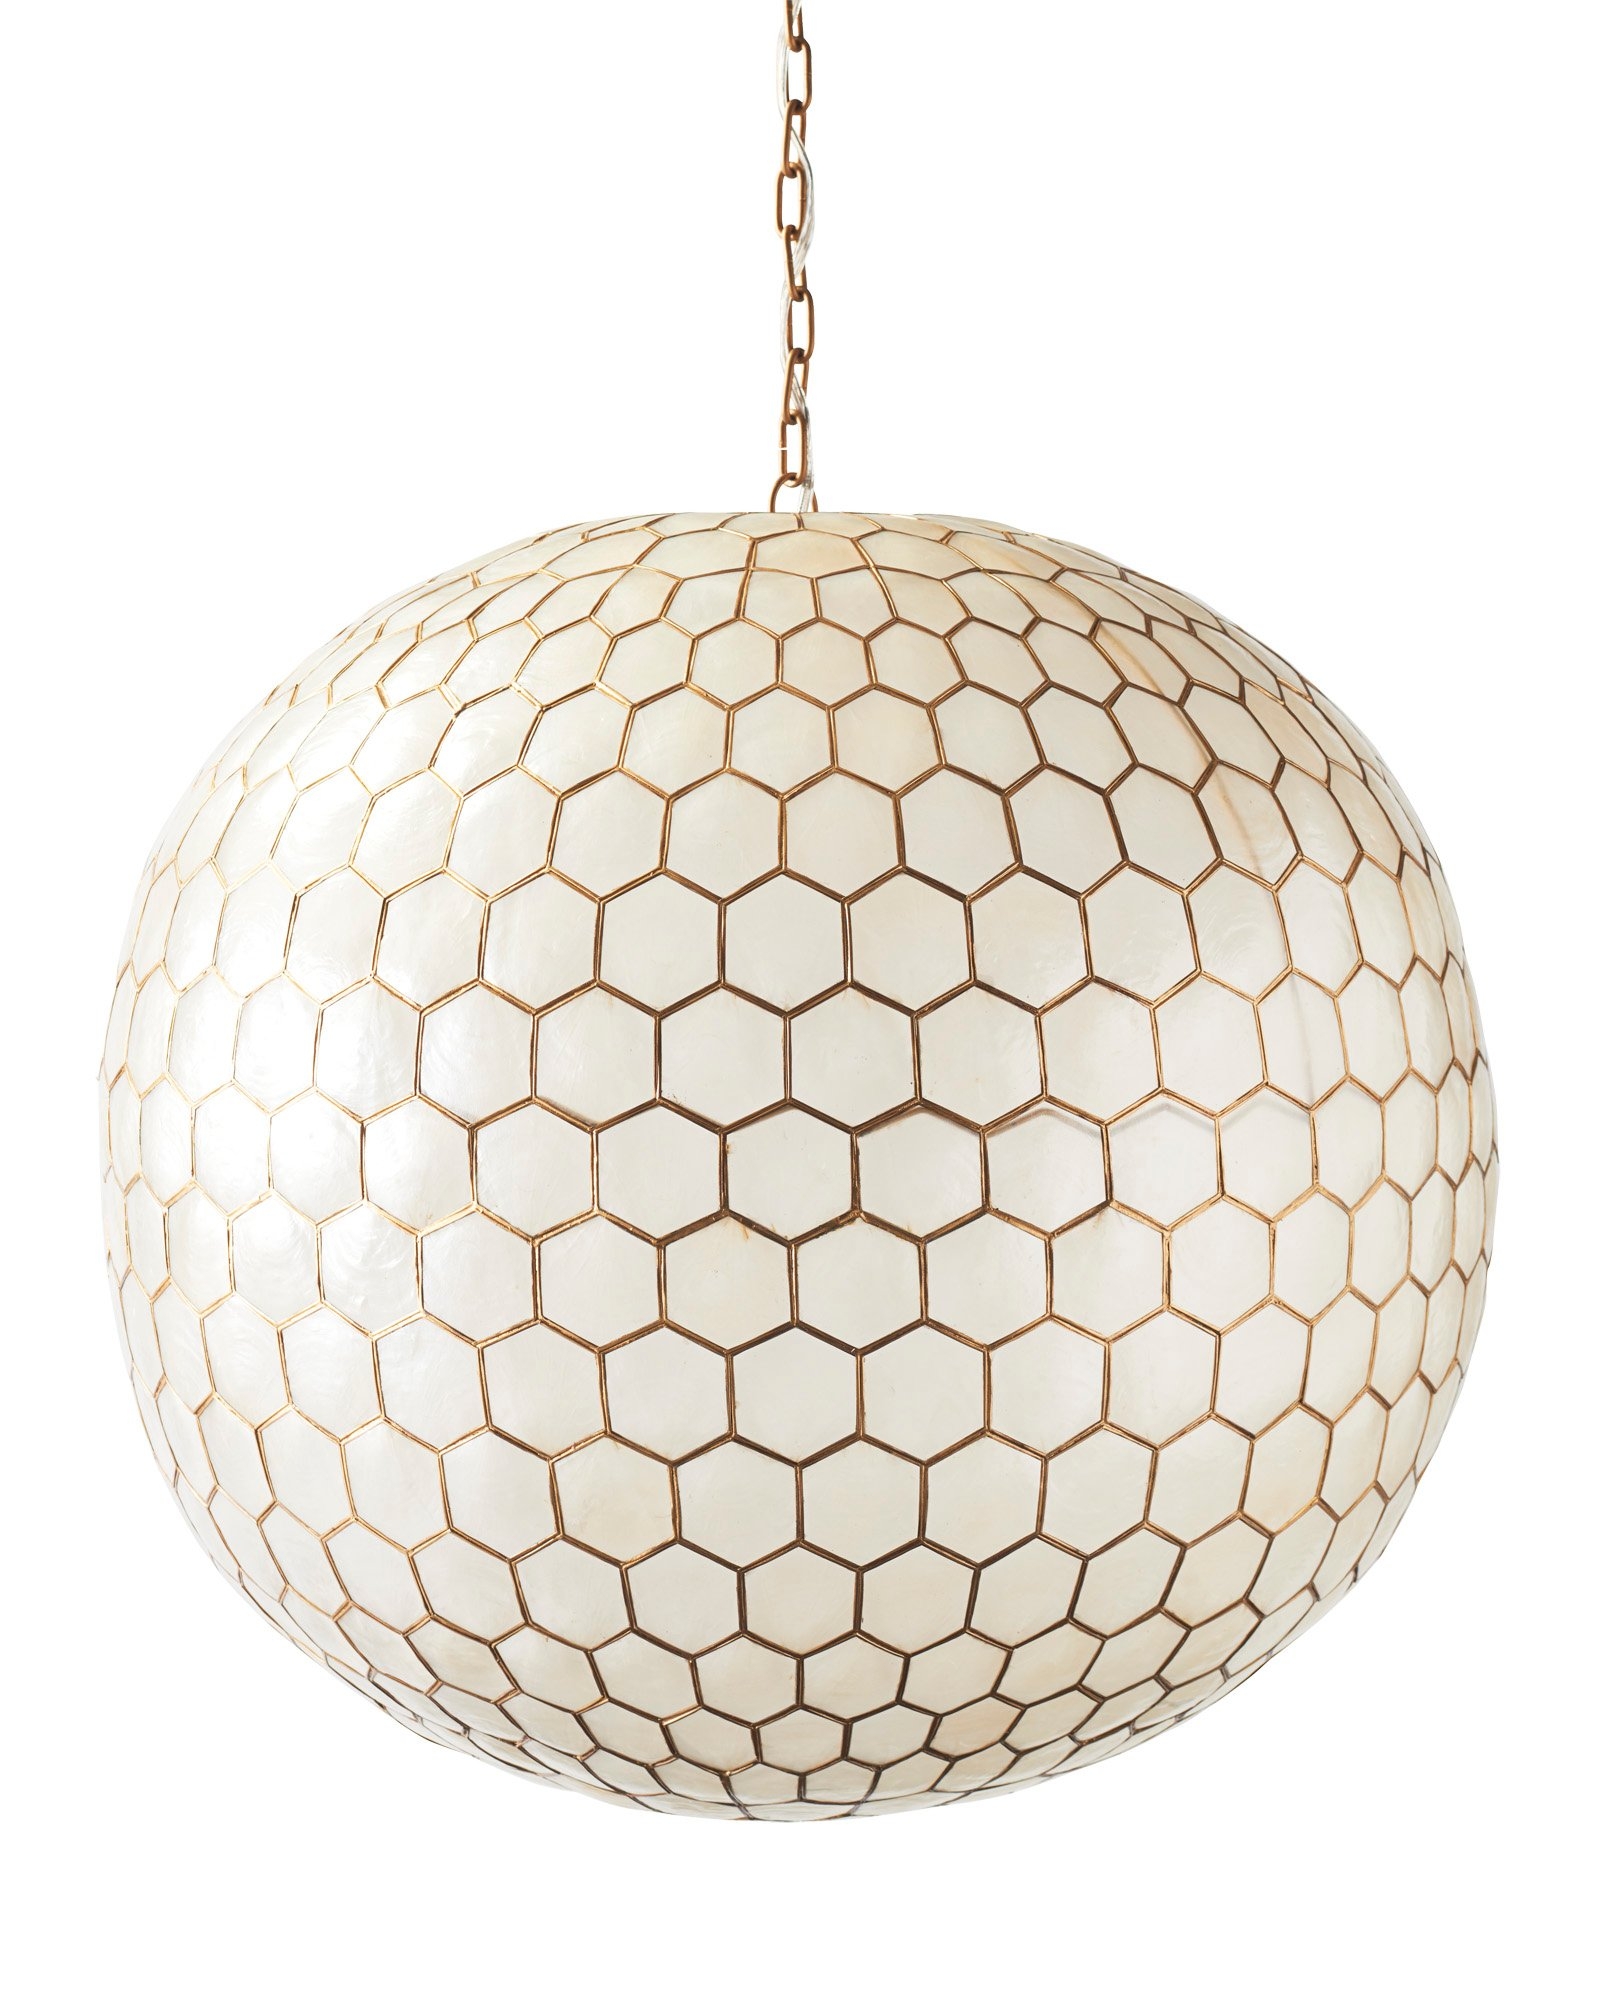 Capiz Honeycomb Chandelier - Large - Image 0